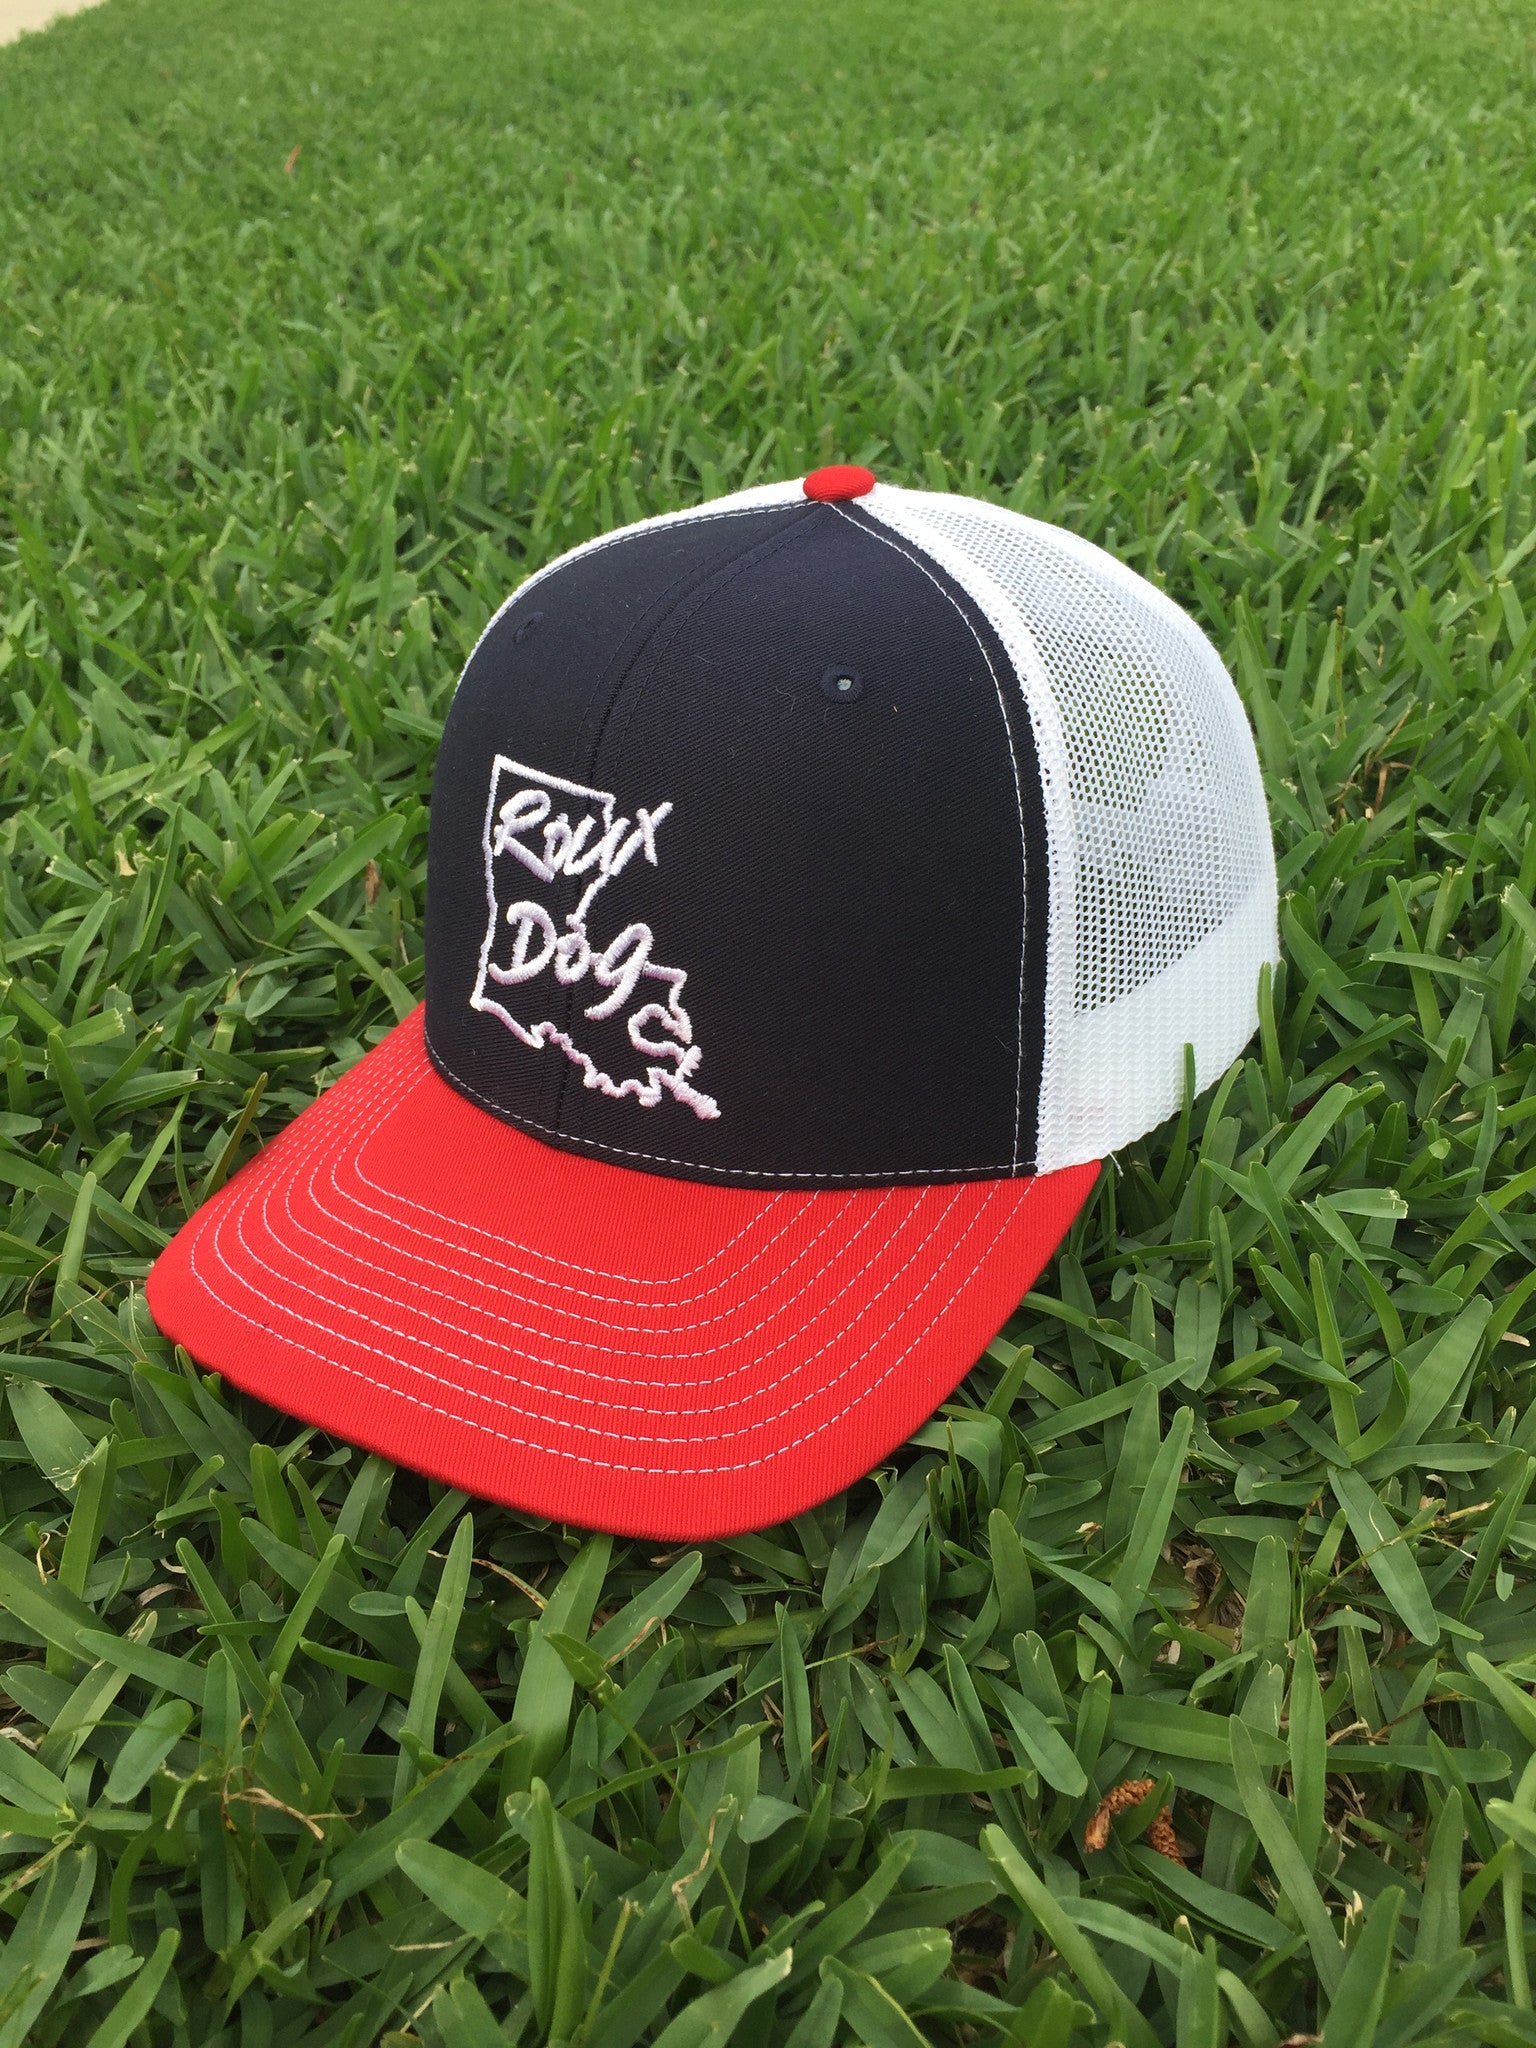 Roux Dog Logo Mesh Back Cap -- Navy/White/Red